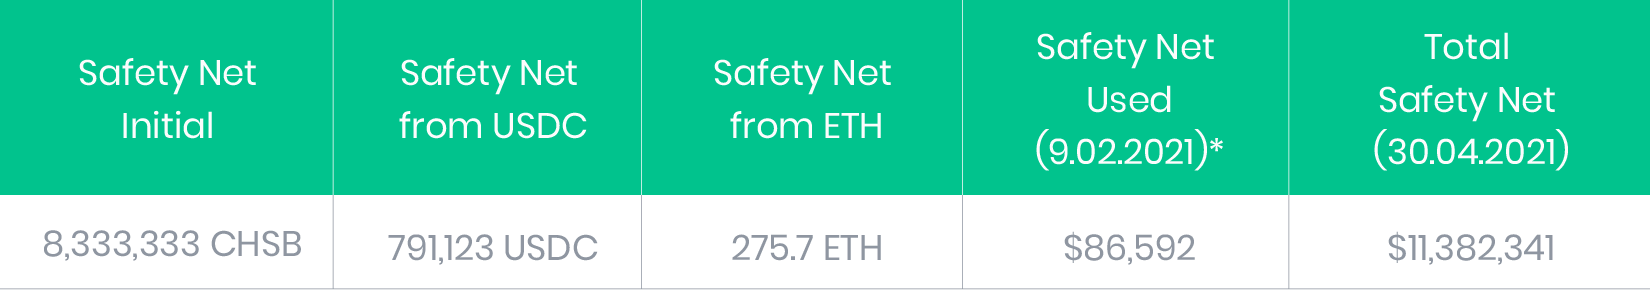 Safety Net results 